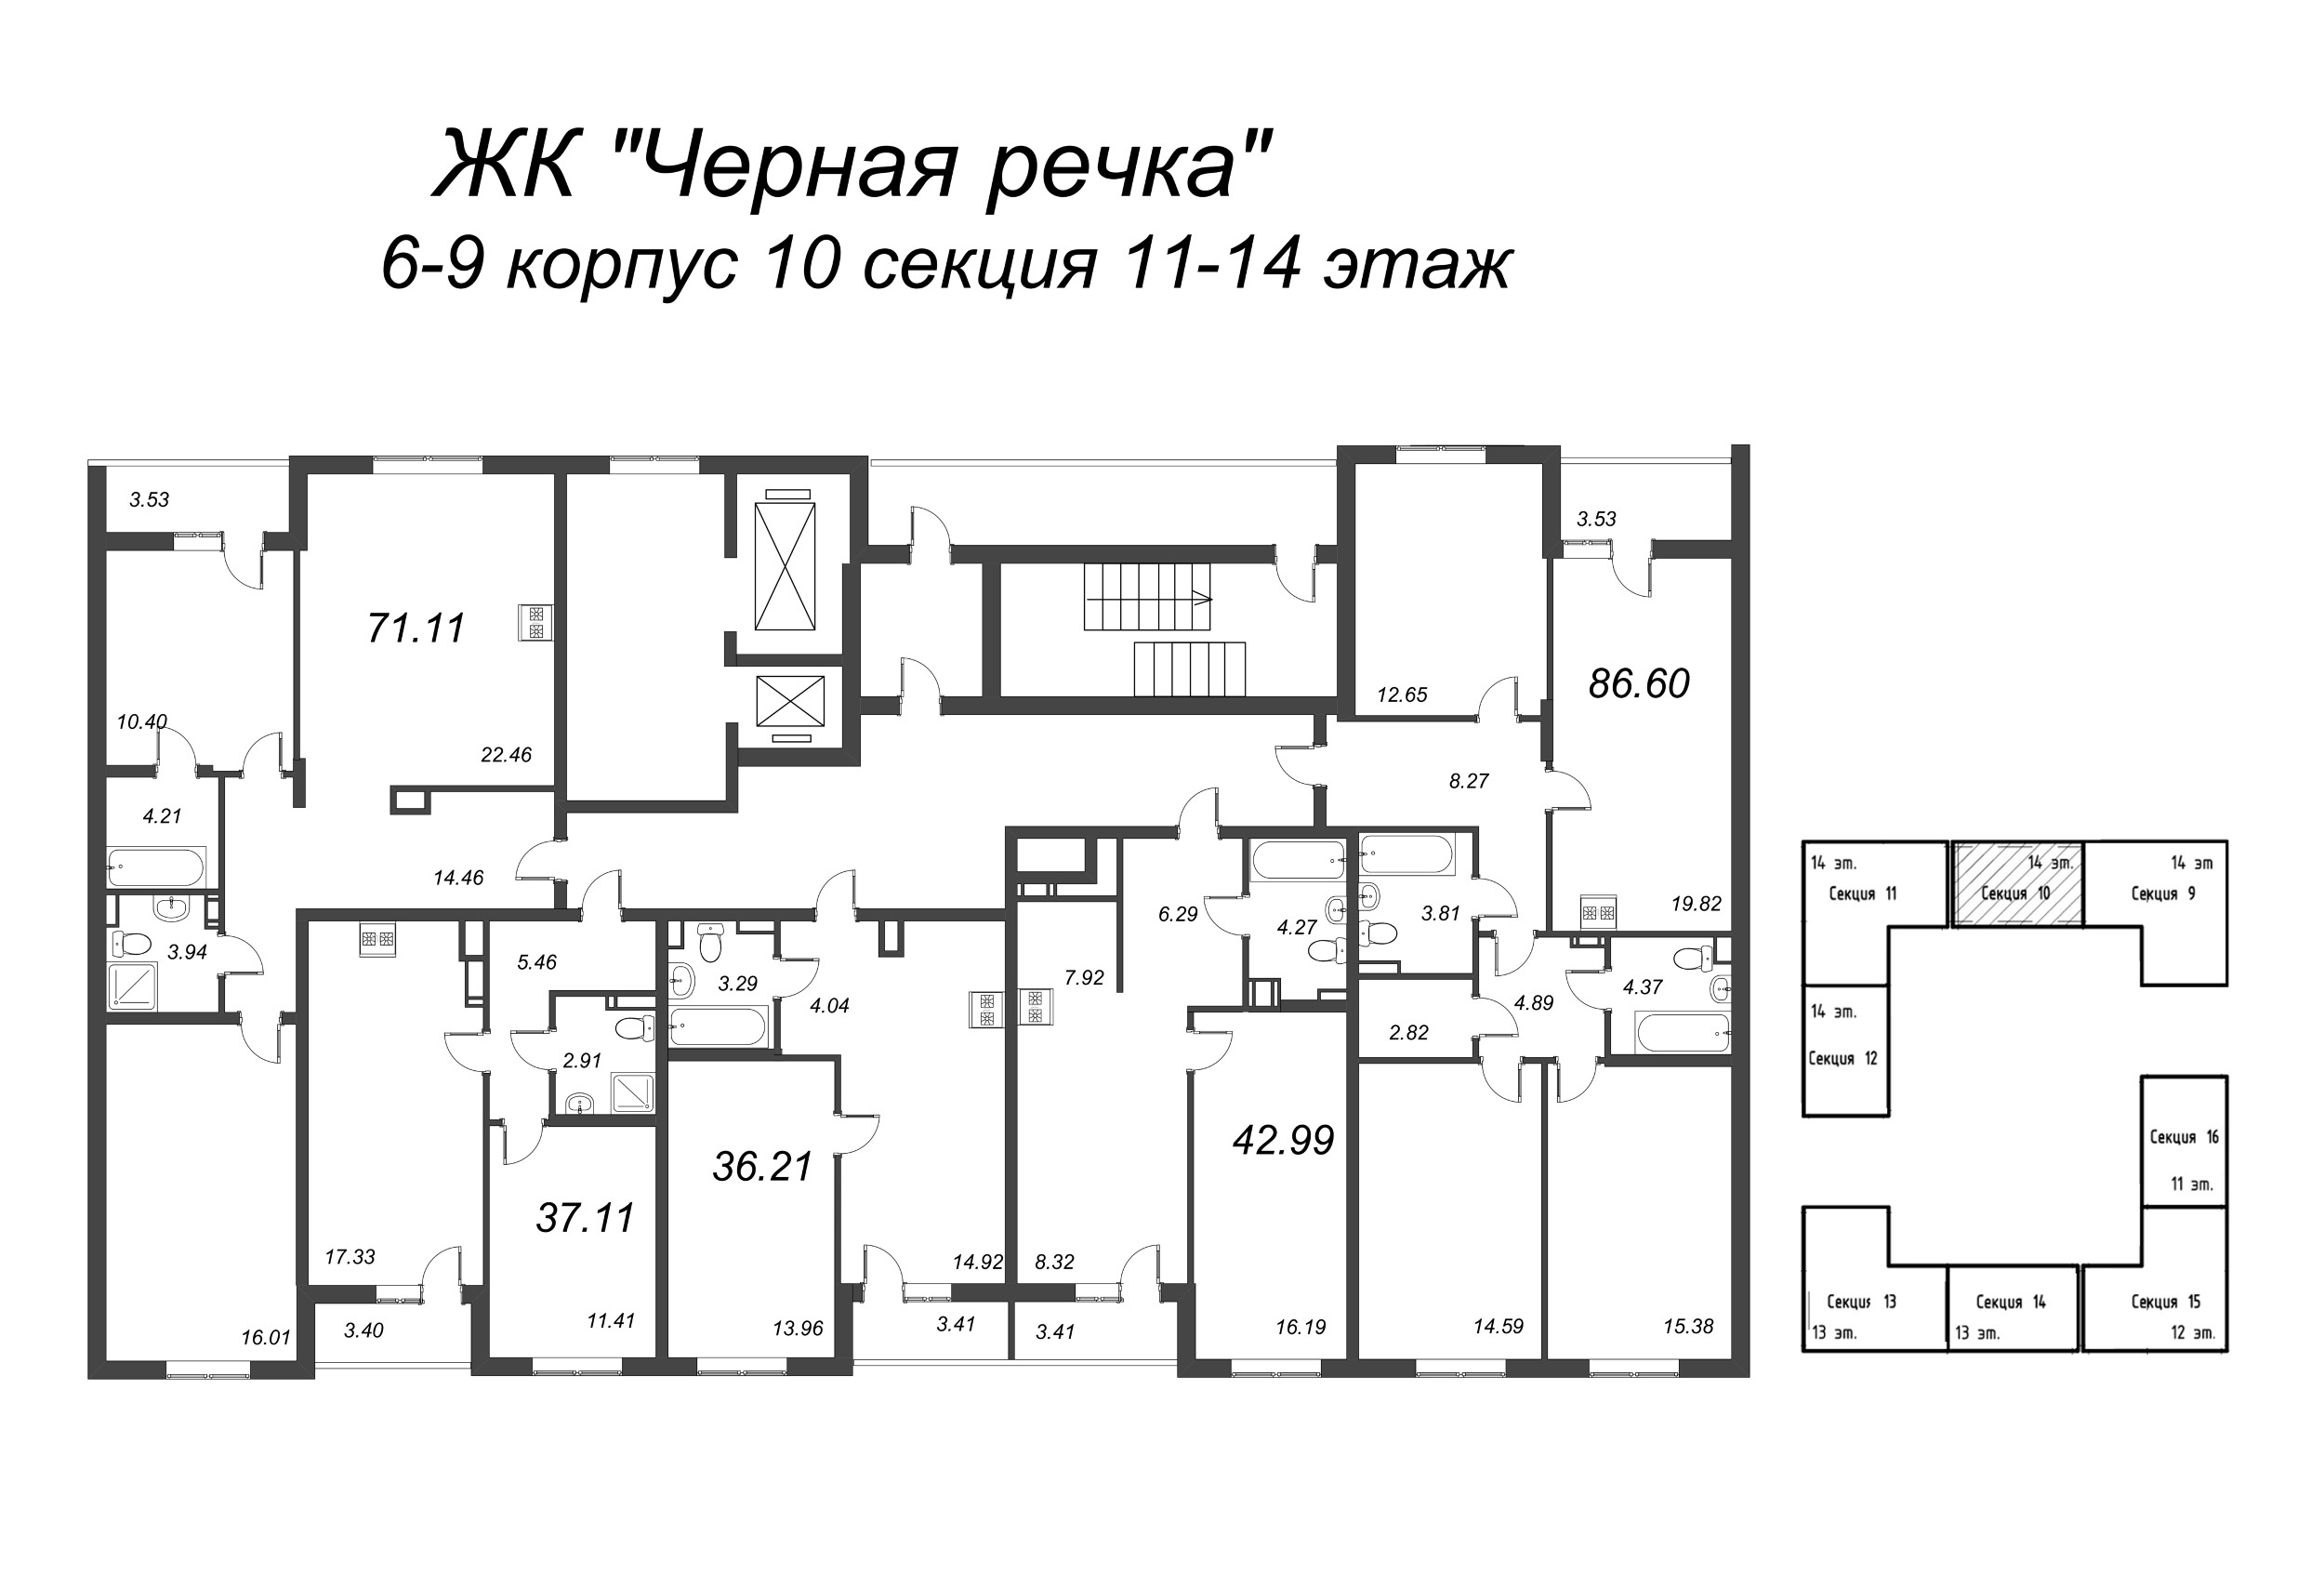 2-комнатная (Евро) квартира, 42.99 м² - планировка этажа